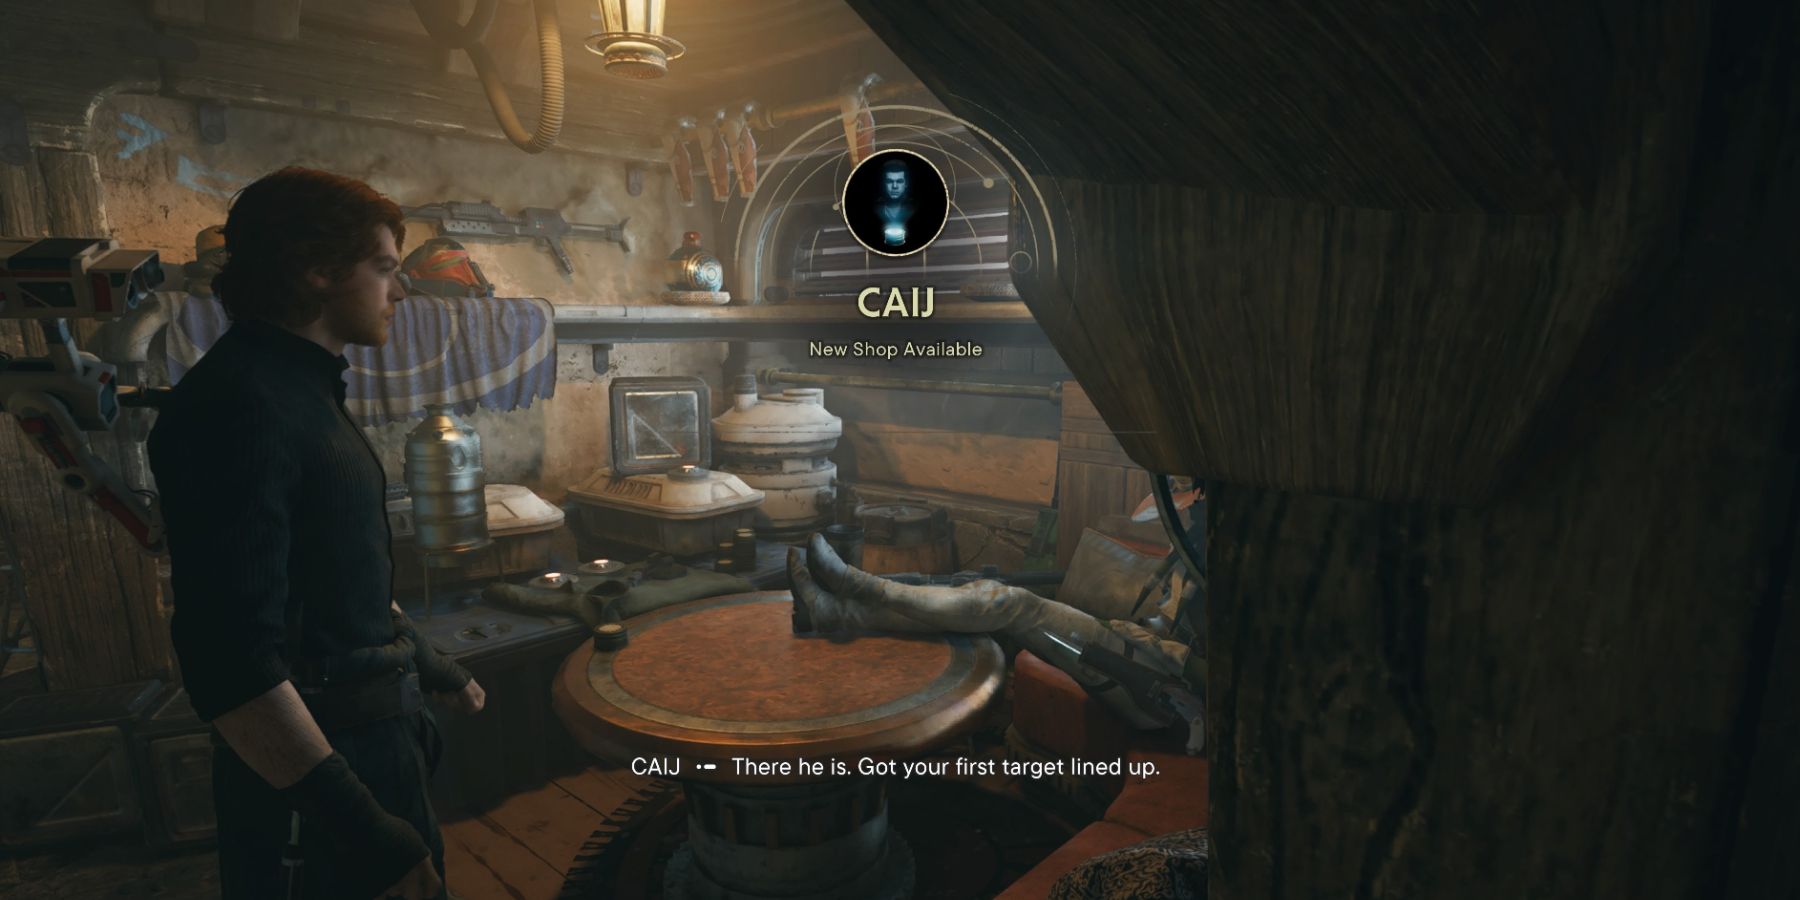 Cal visits Caij's shop in Star Wars Jedi: Survivor